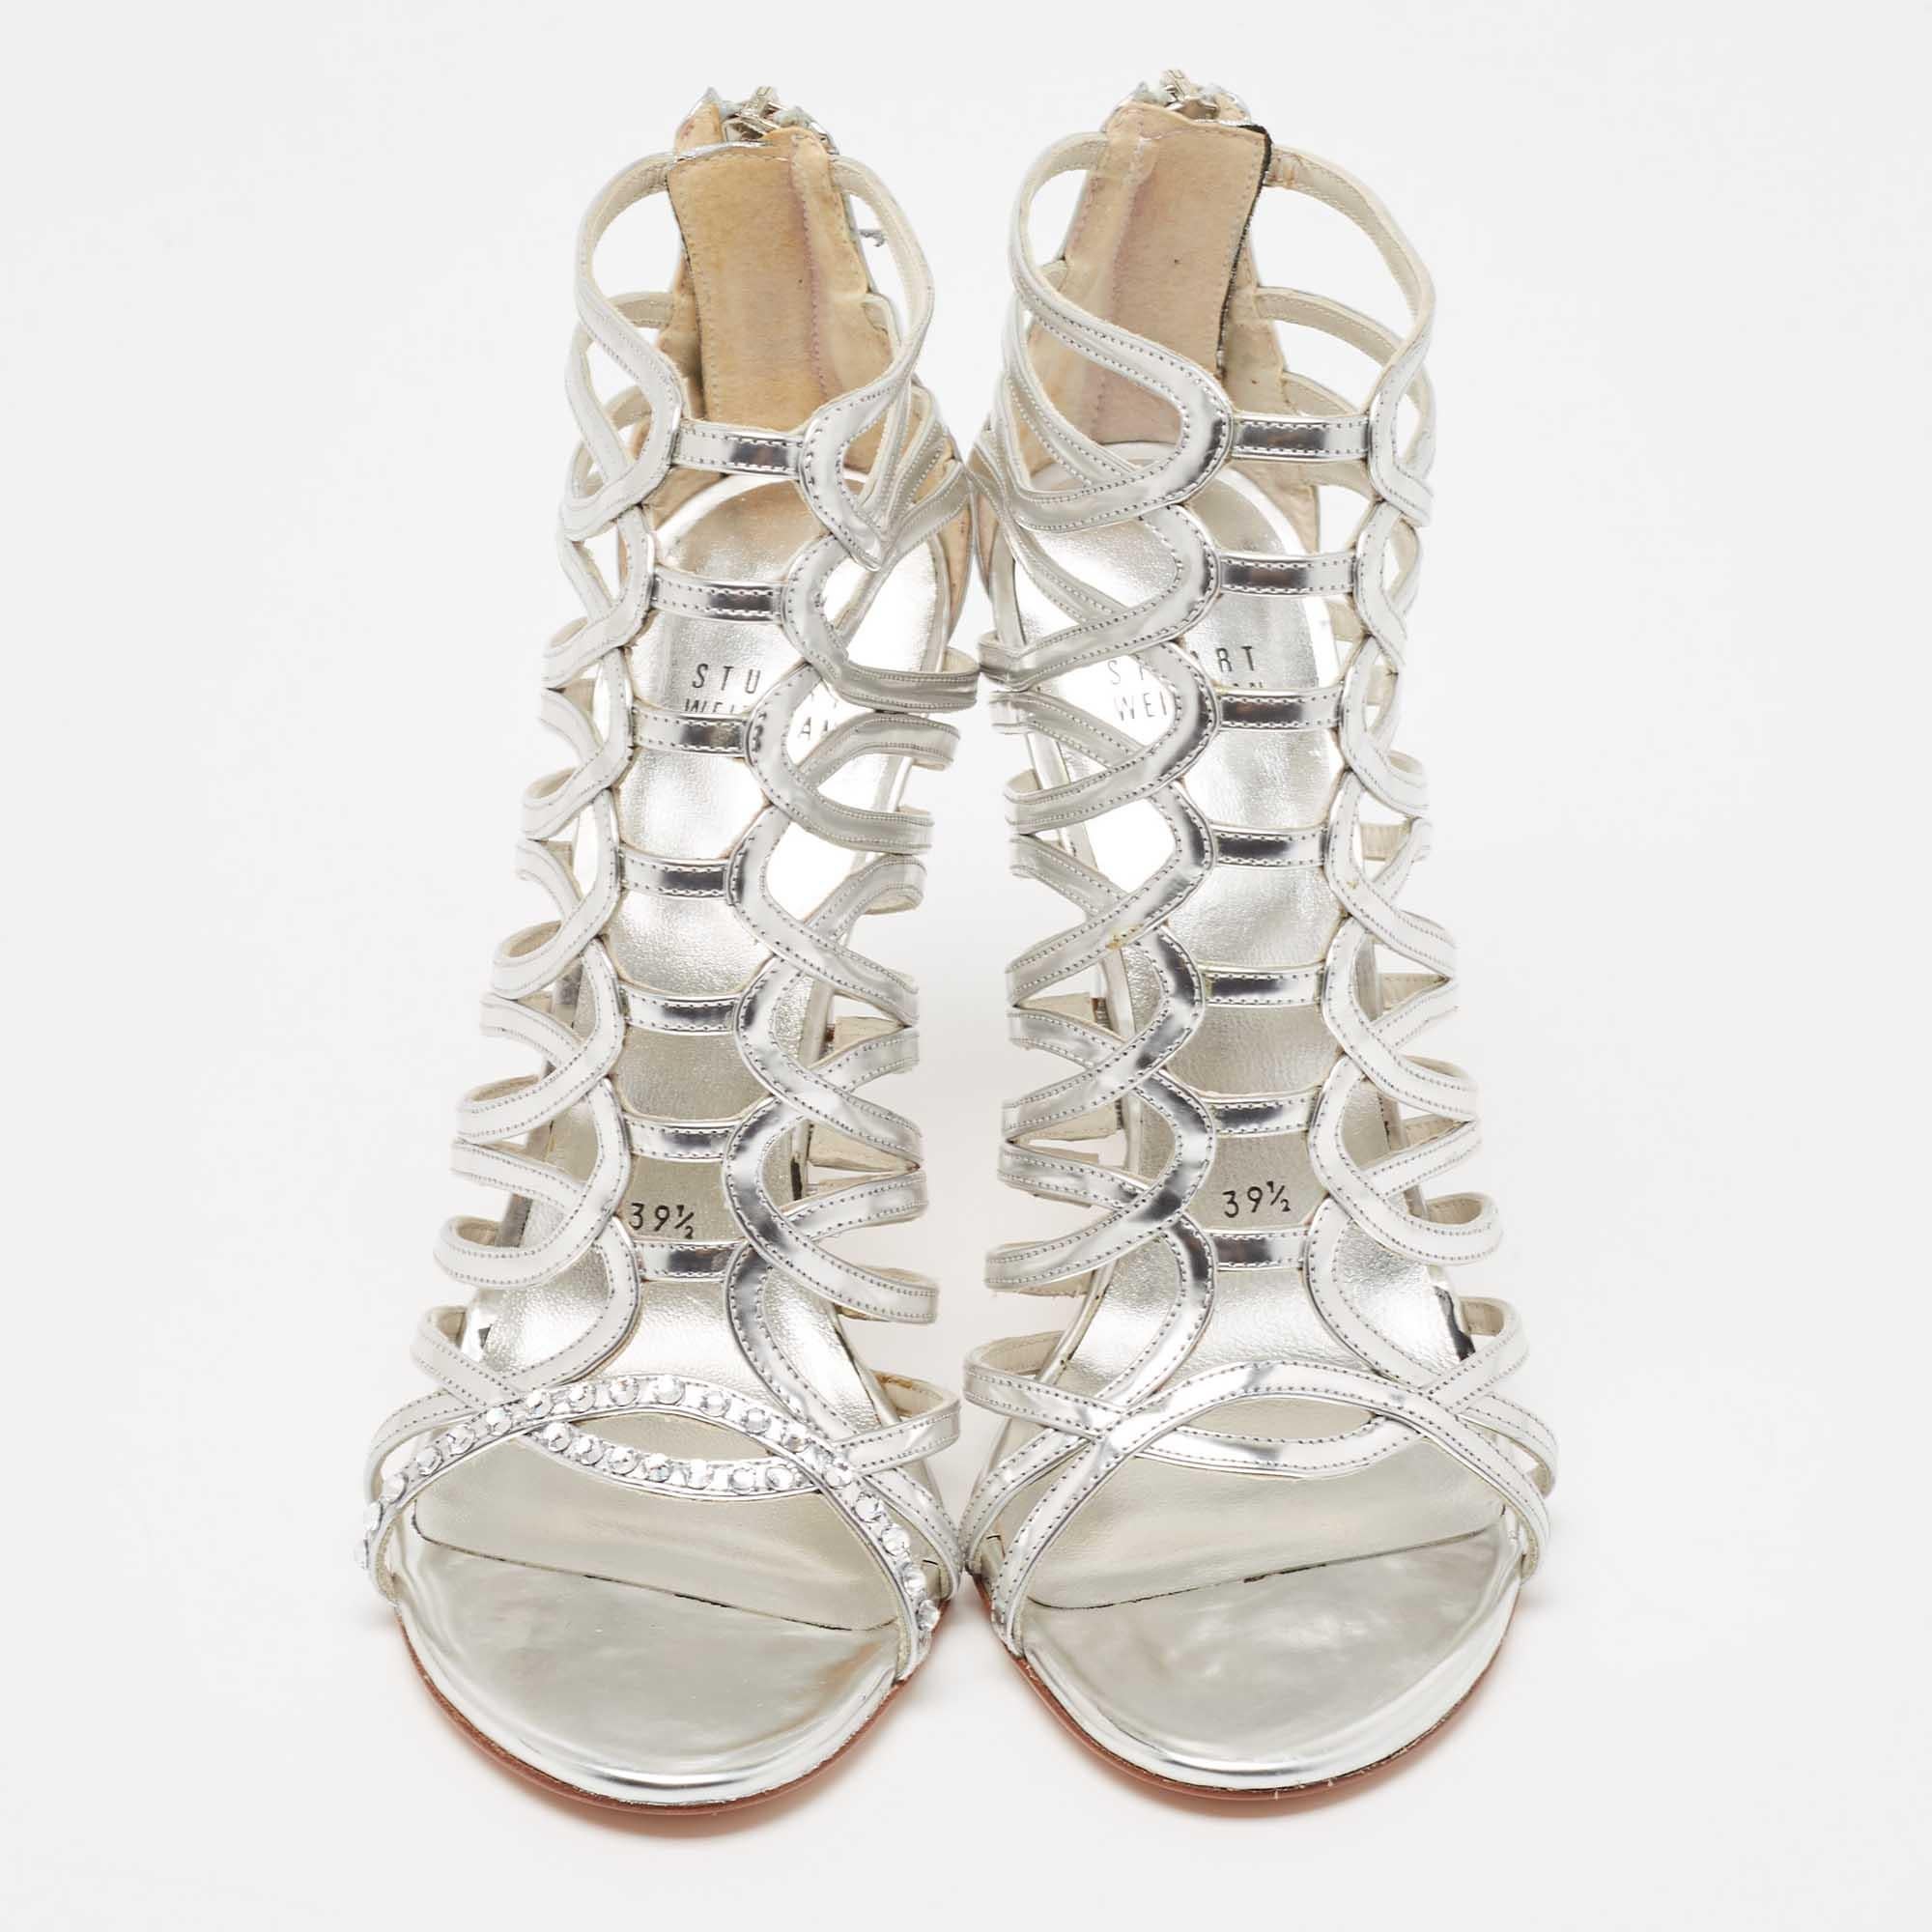 Stuart Weitzman Metallic Silver Leather Crystal Embellished Strappy Sandals Size 2